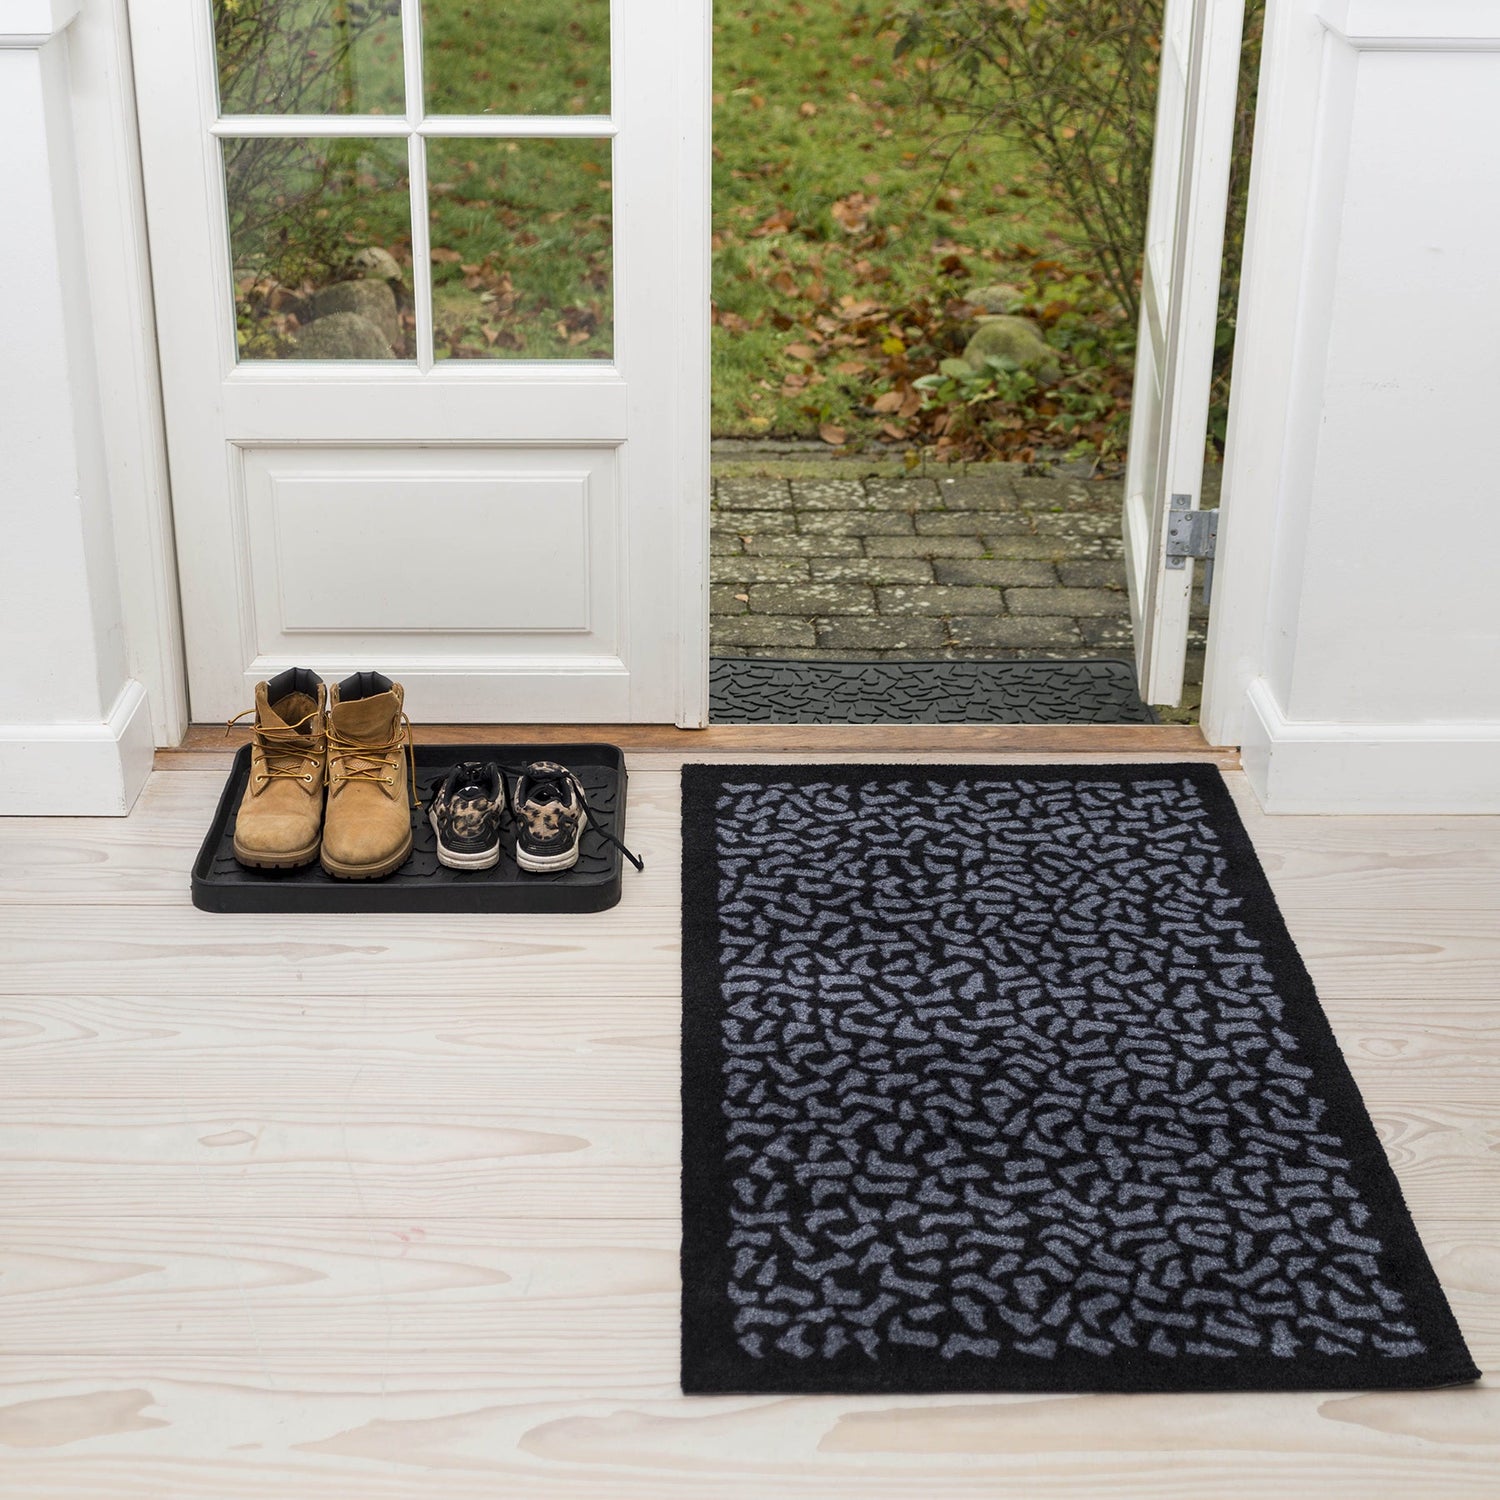 Floor mat 67 x 120 cm - Footwear/Black Gray